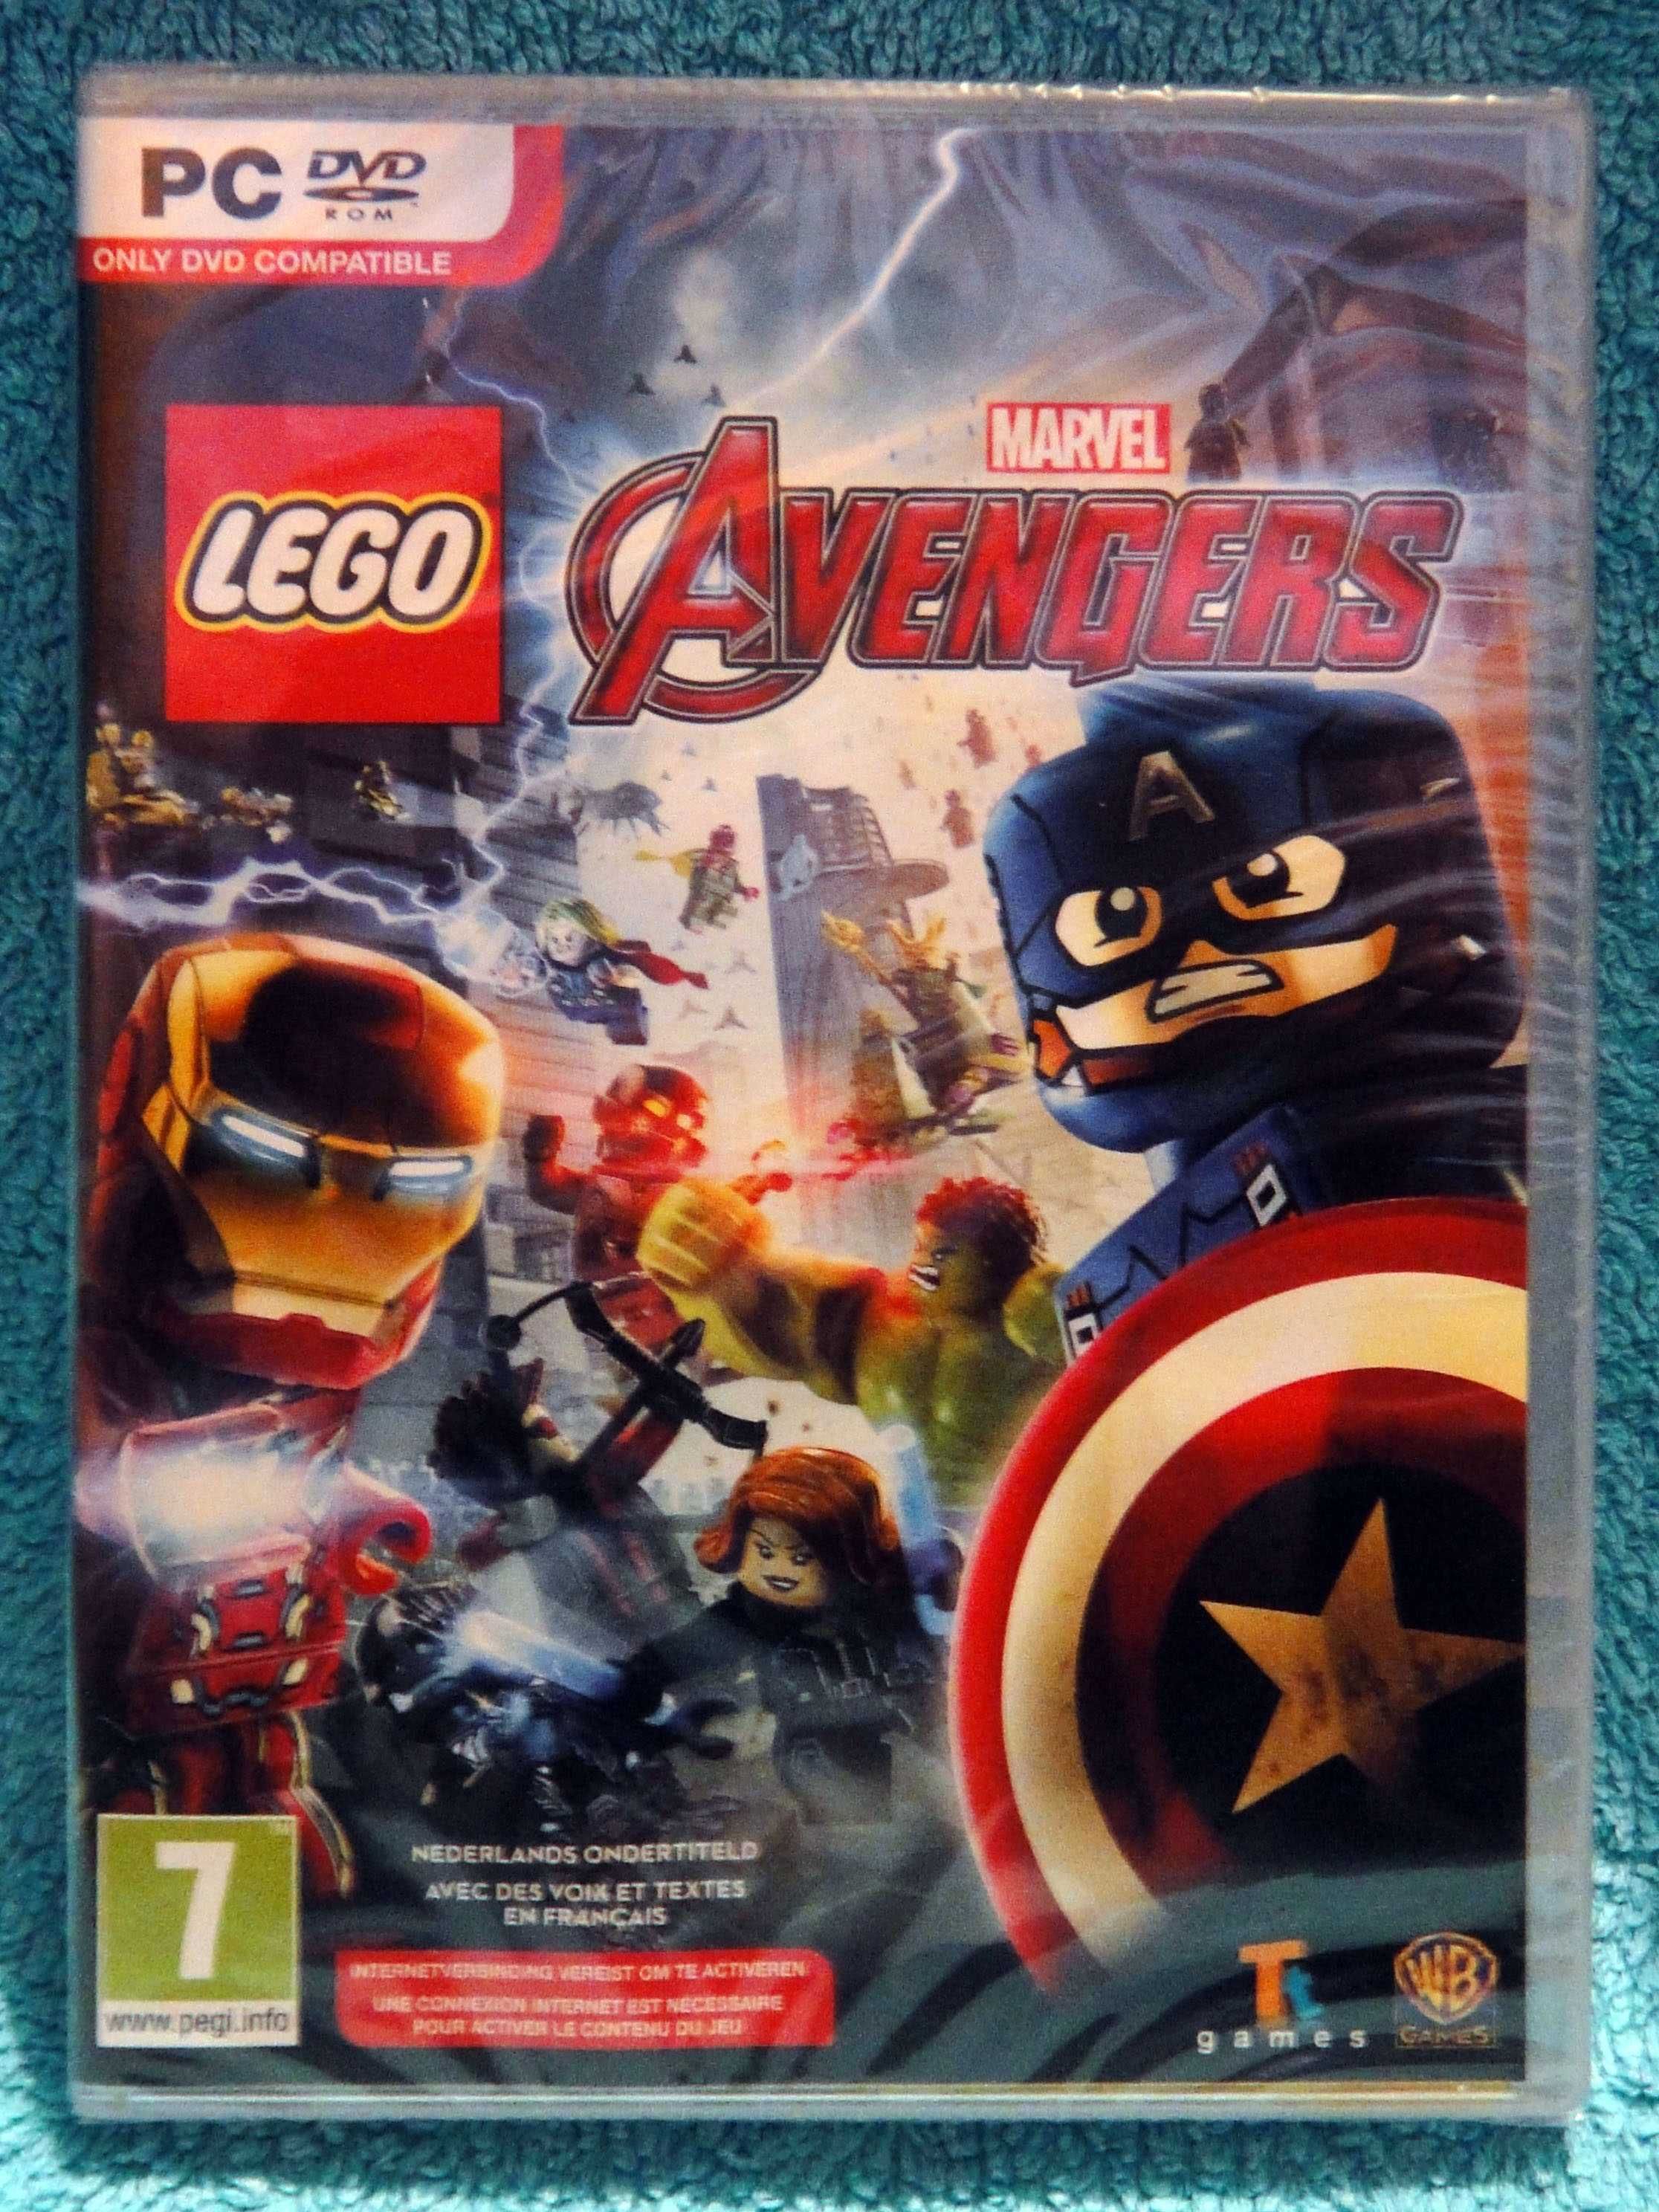 PC DVD LEGO Avengers